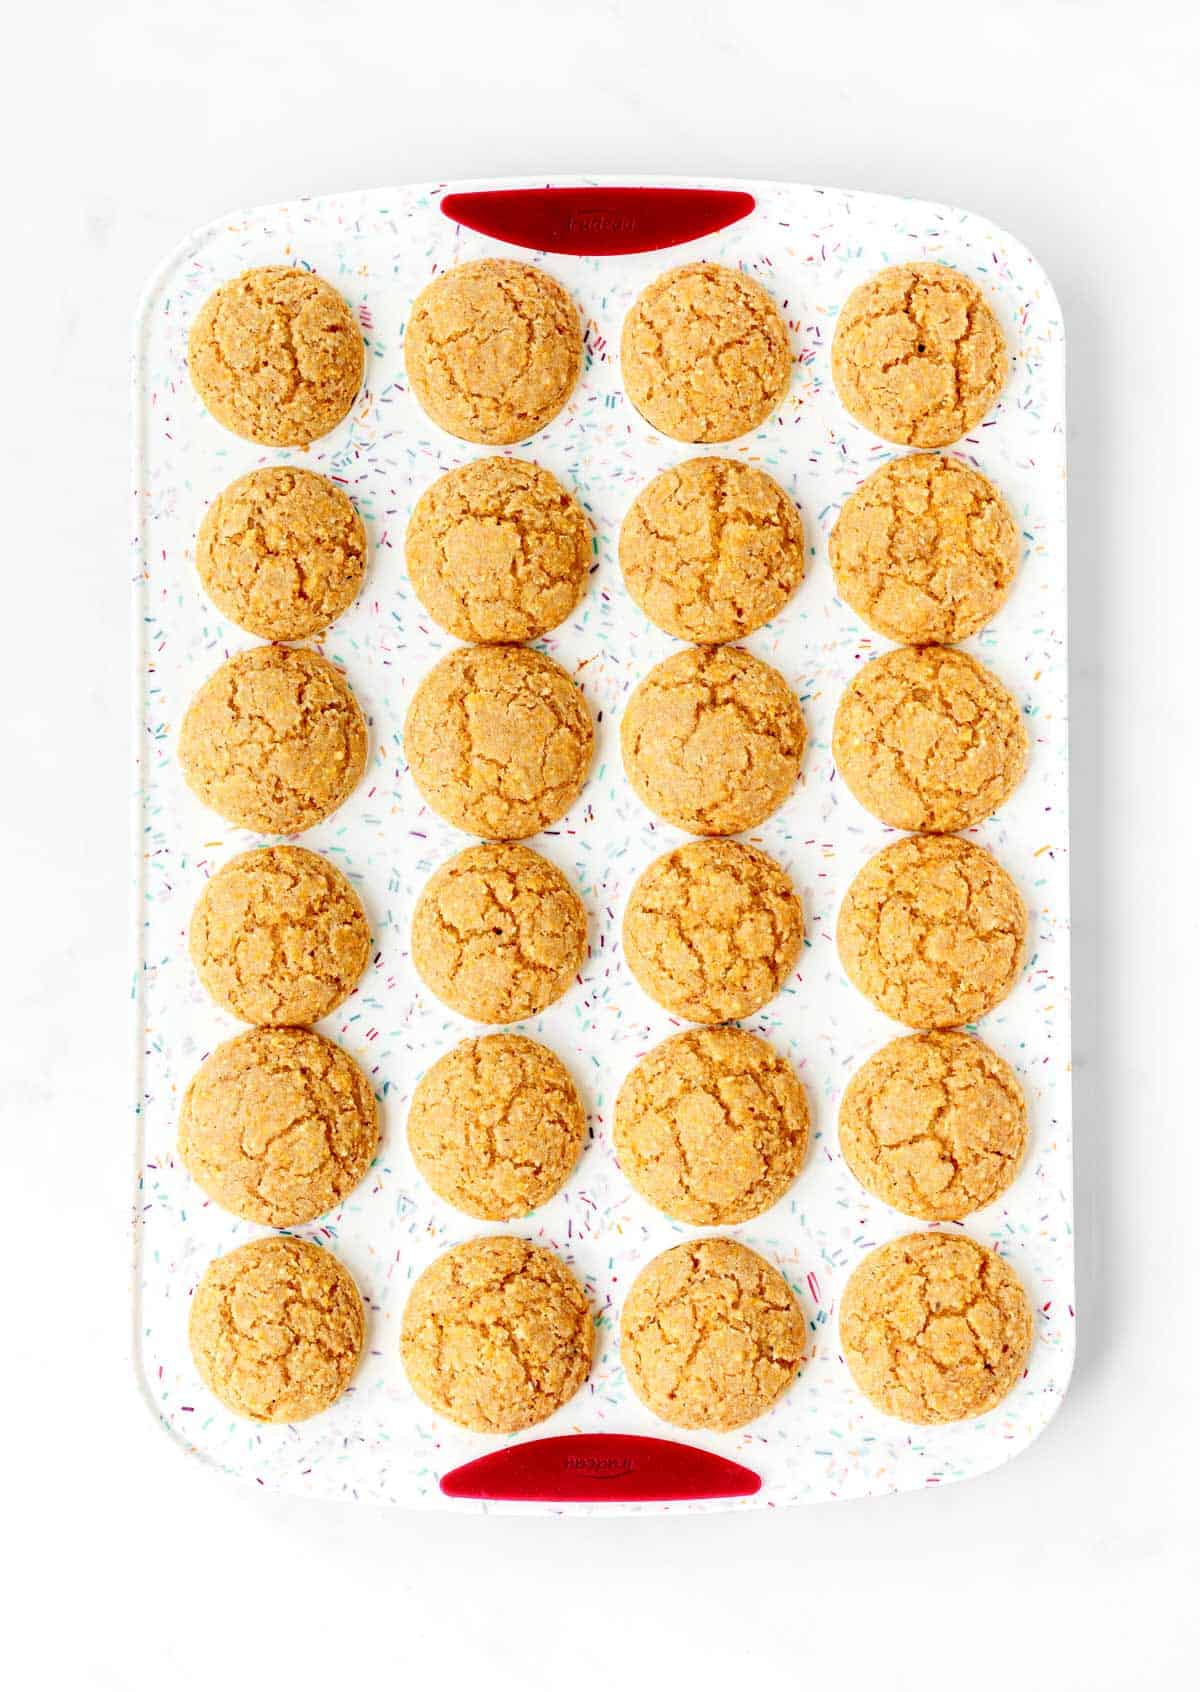 Baked mini cornbread muffins in a silicone muffin tray.